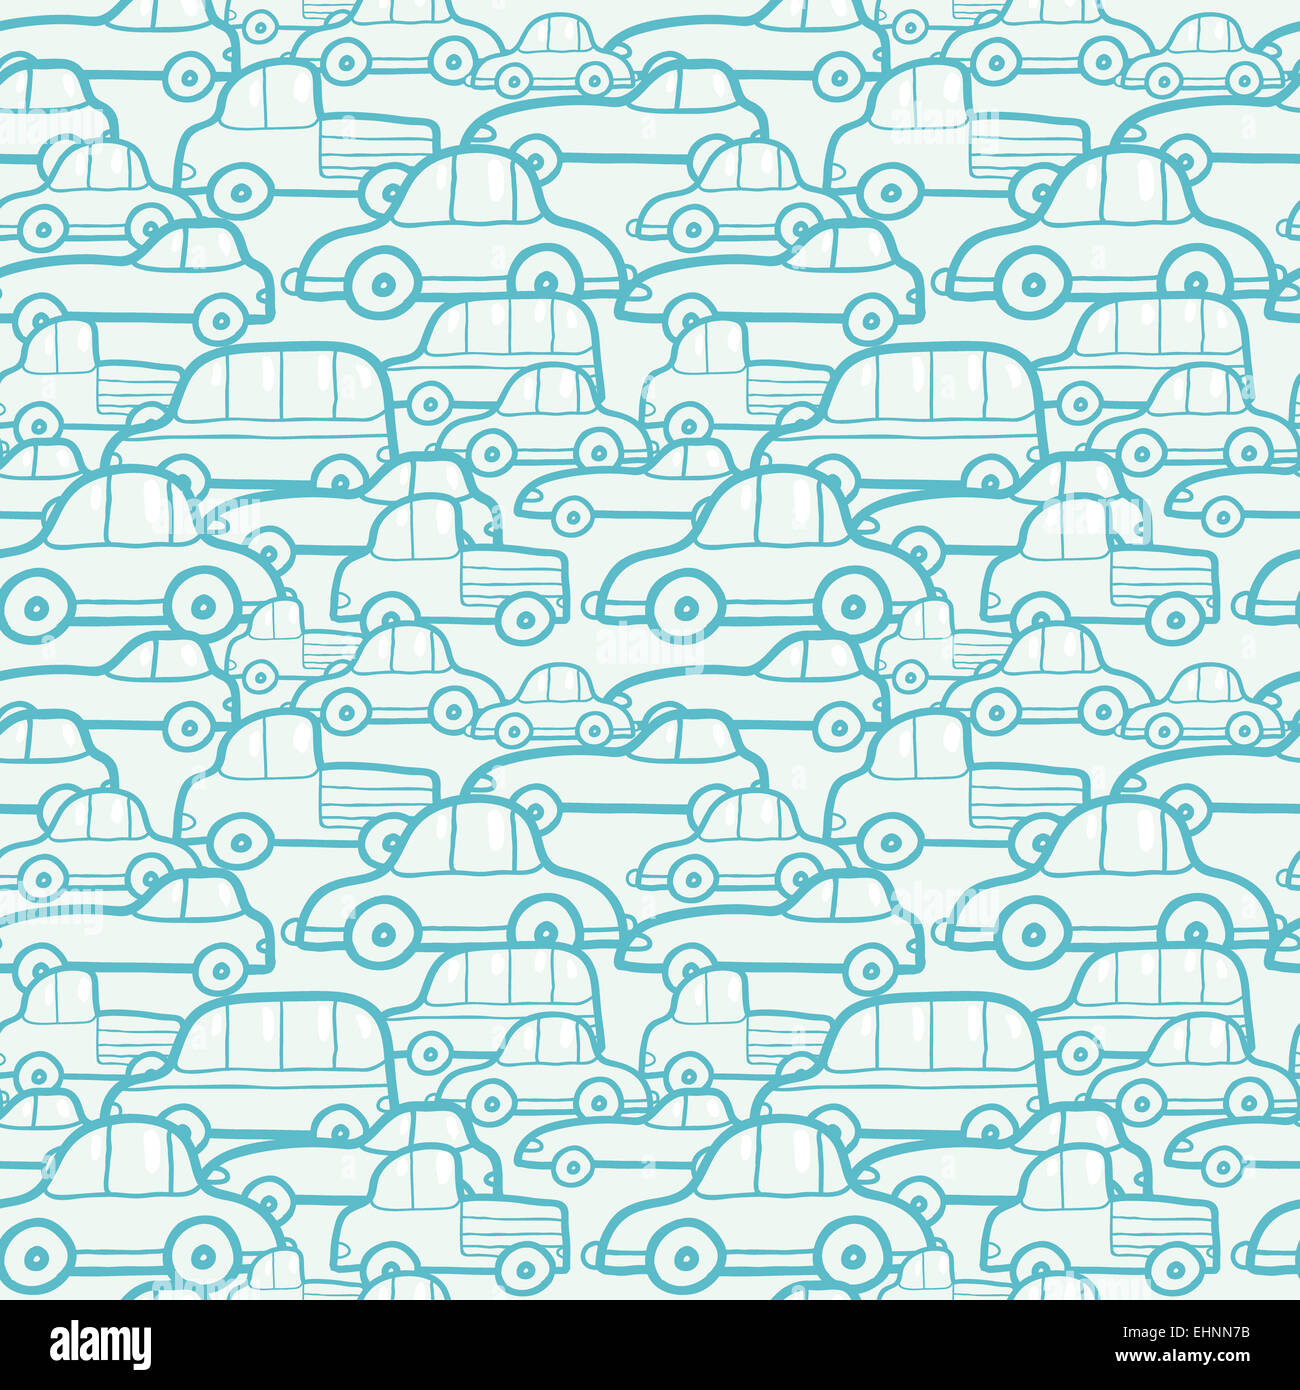 Doodle Autos Musterdesign Hintergrund Stockfoto